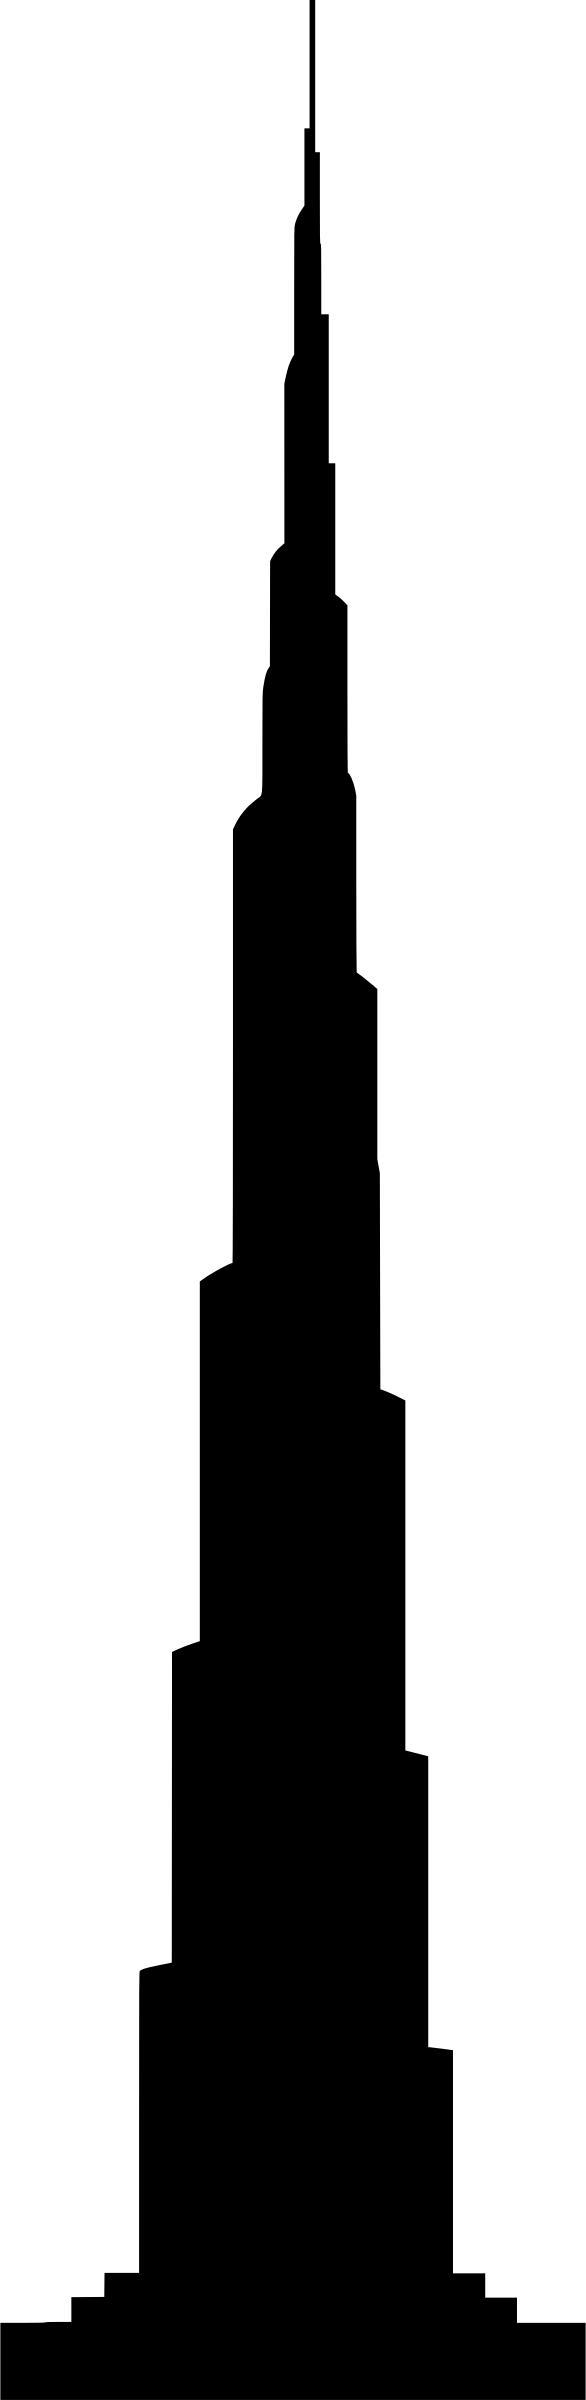 Burj Khalifa silhouette png transparent